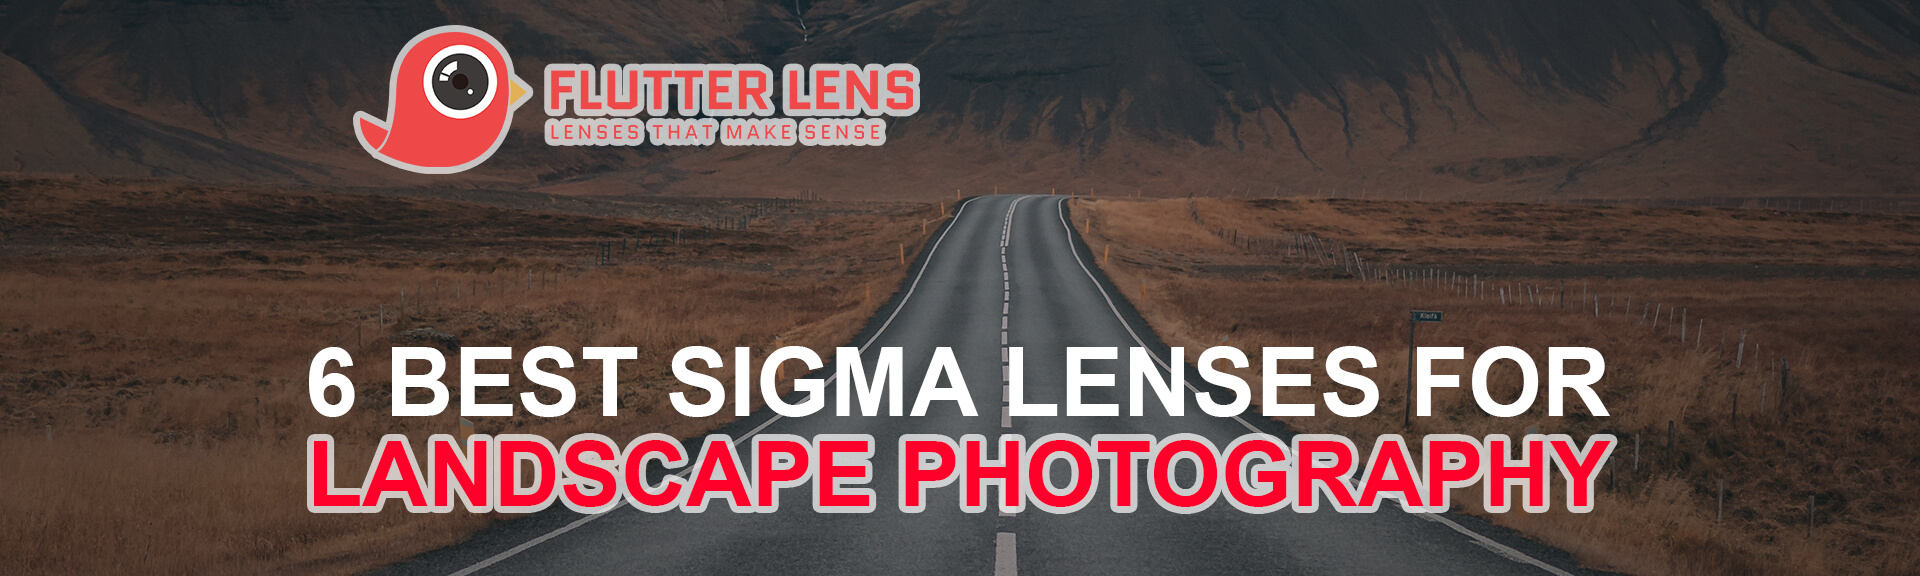 6 Best Sigma Lenses for Landscape Photography